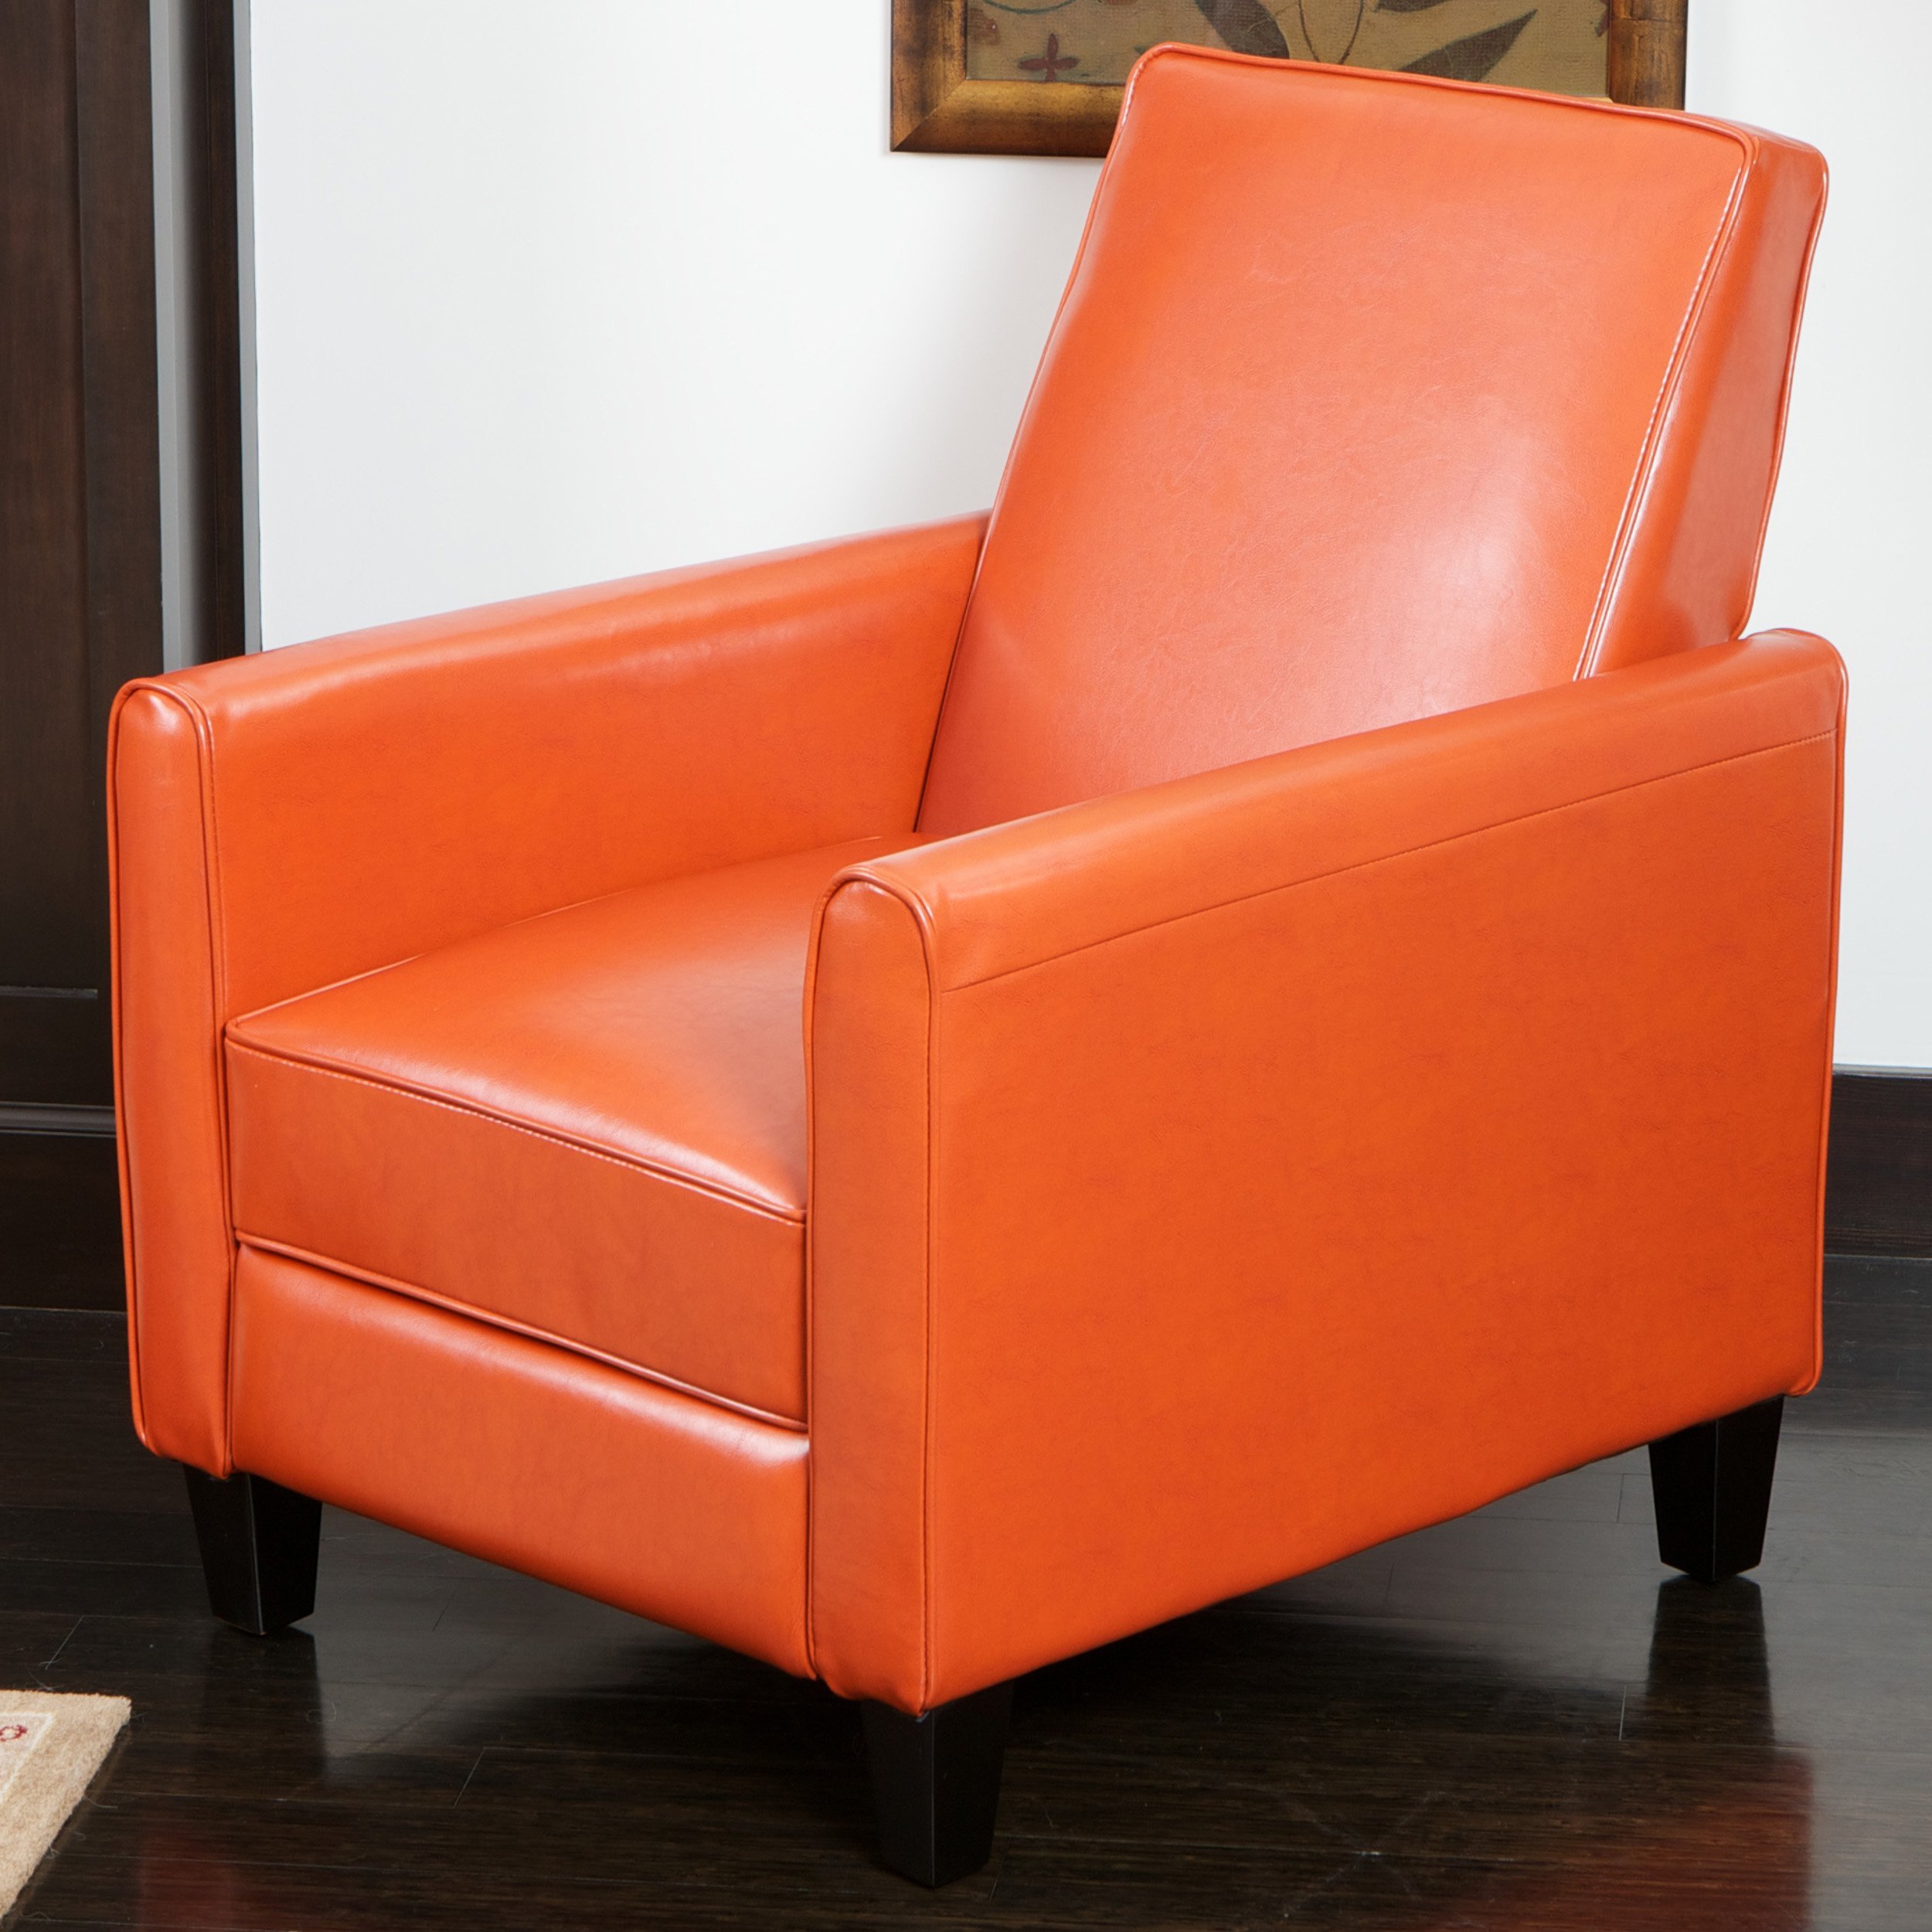 Great Deal Furniture Lucas Orange Leather Modern Sleek Recliner Club Chair